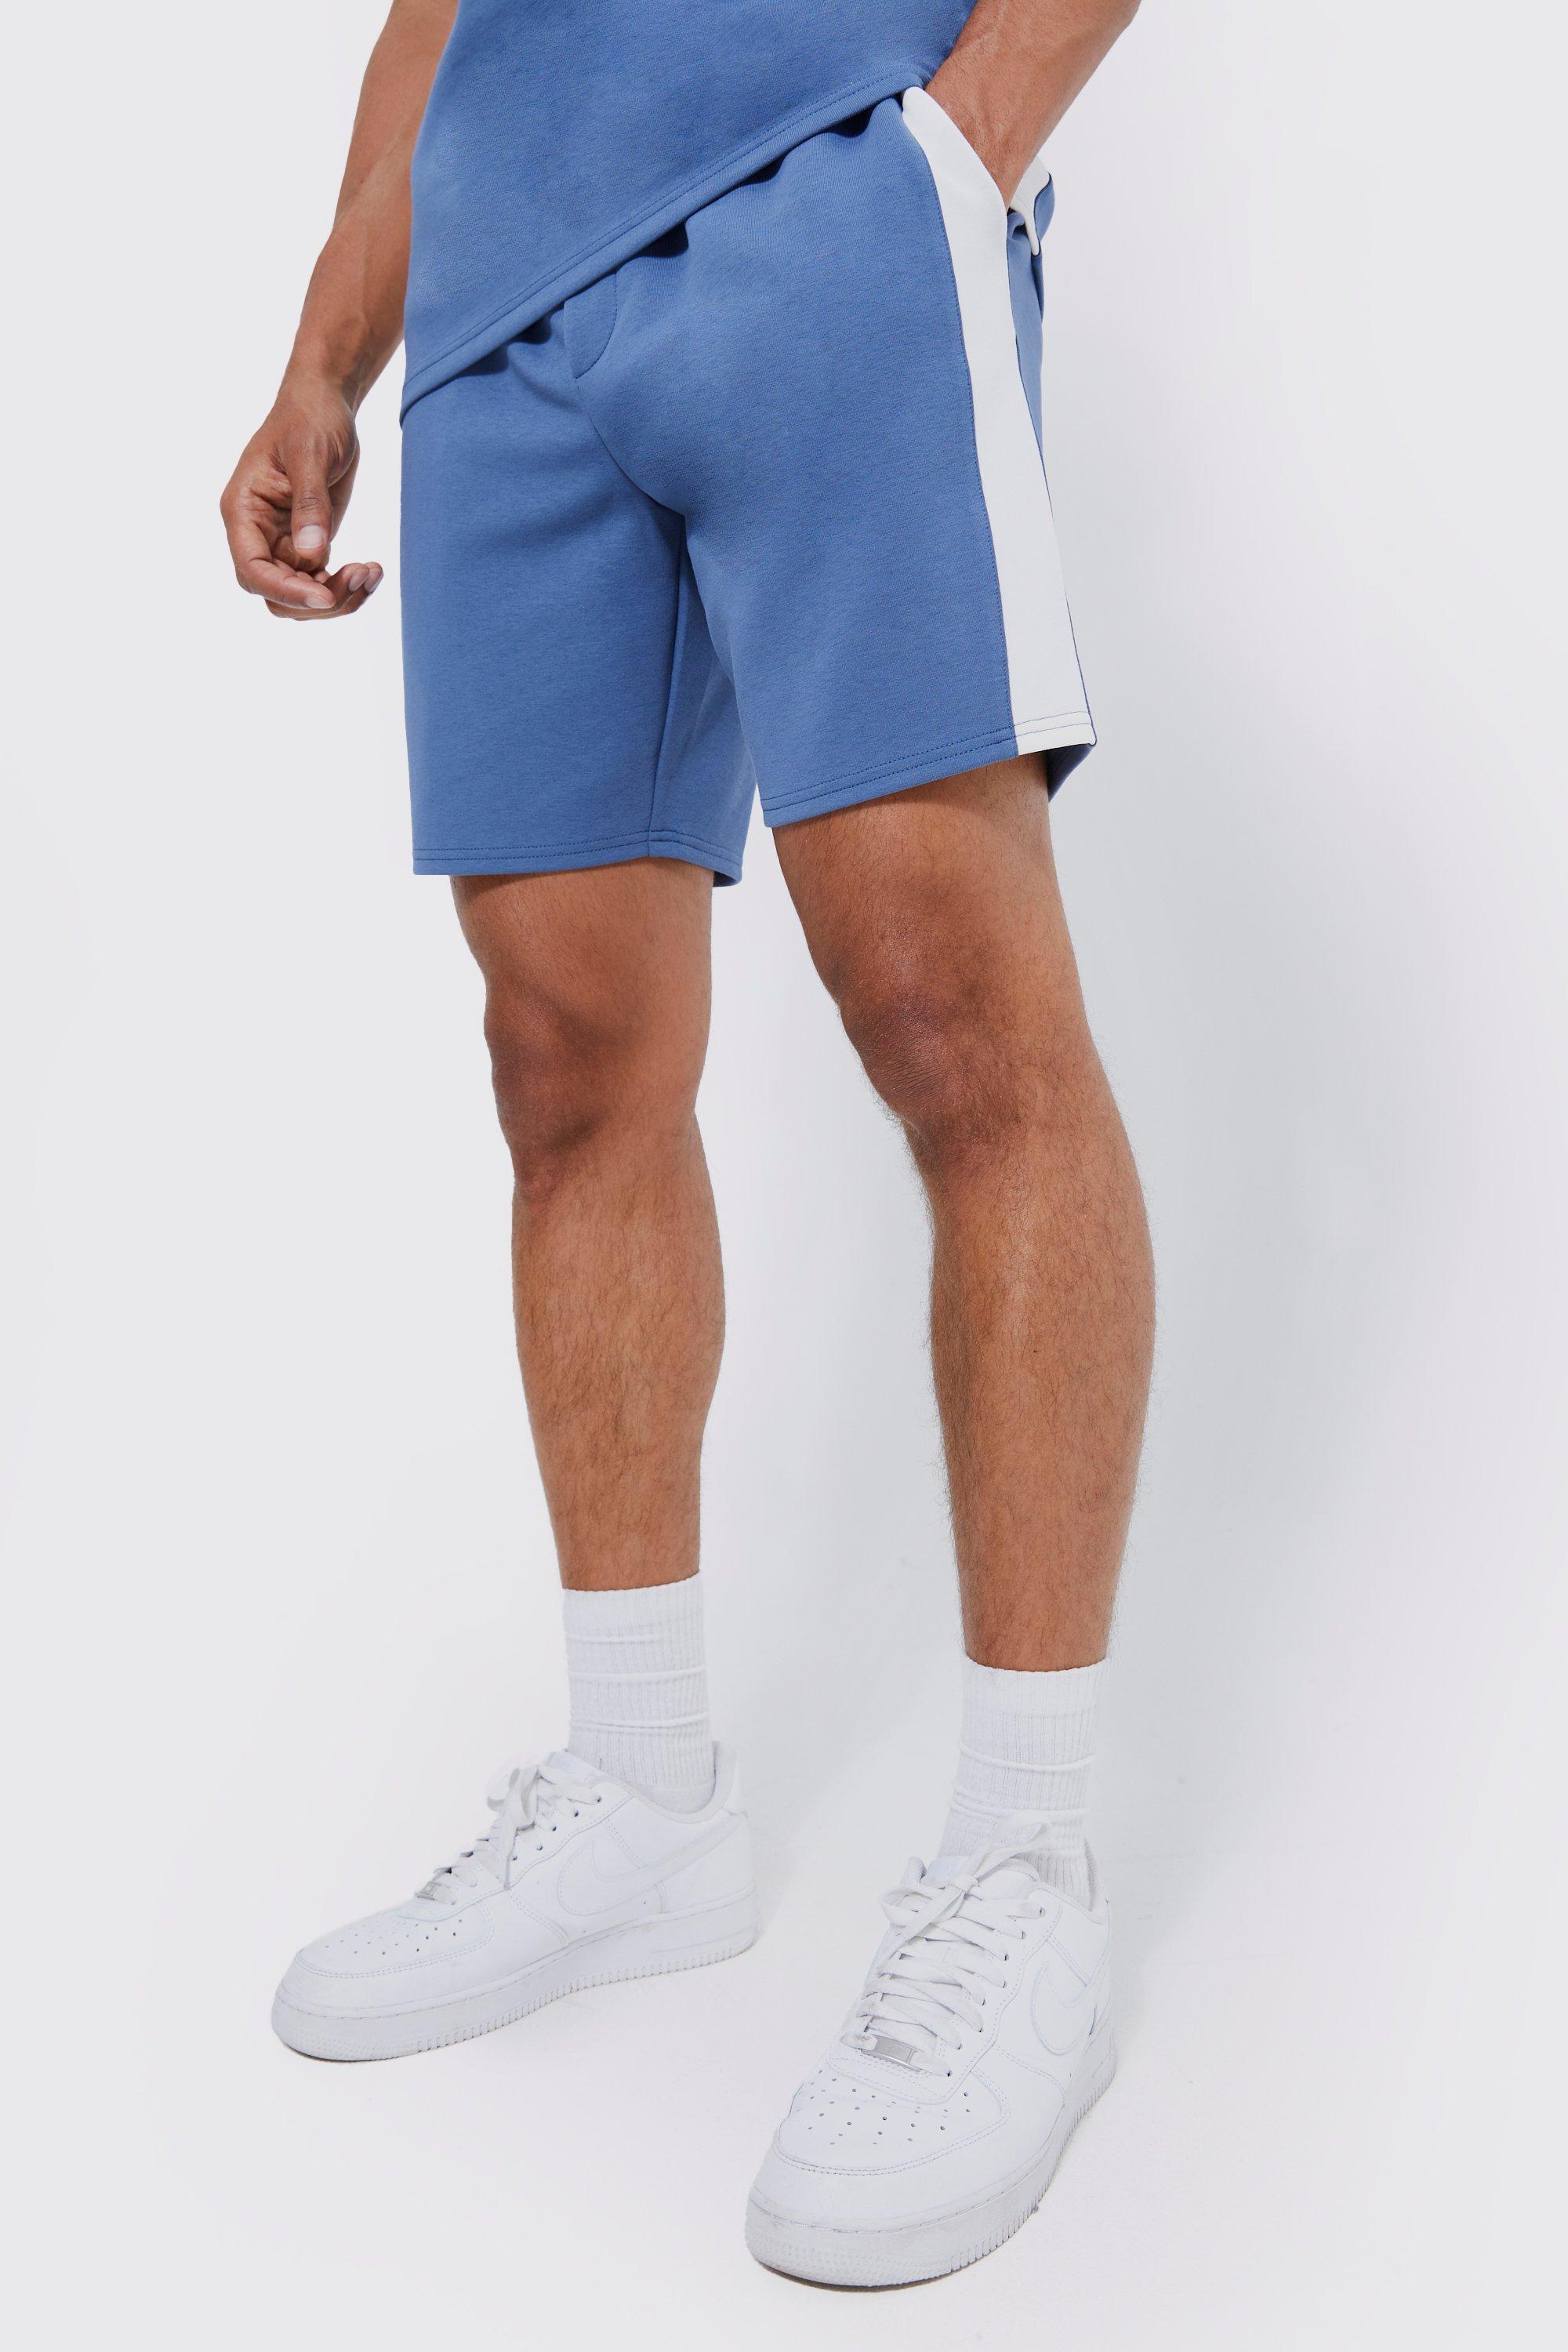 ASOS DESIGN oversized jersey shorts in gray marl